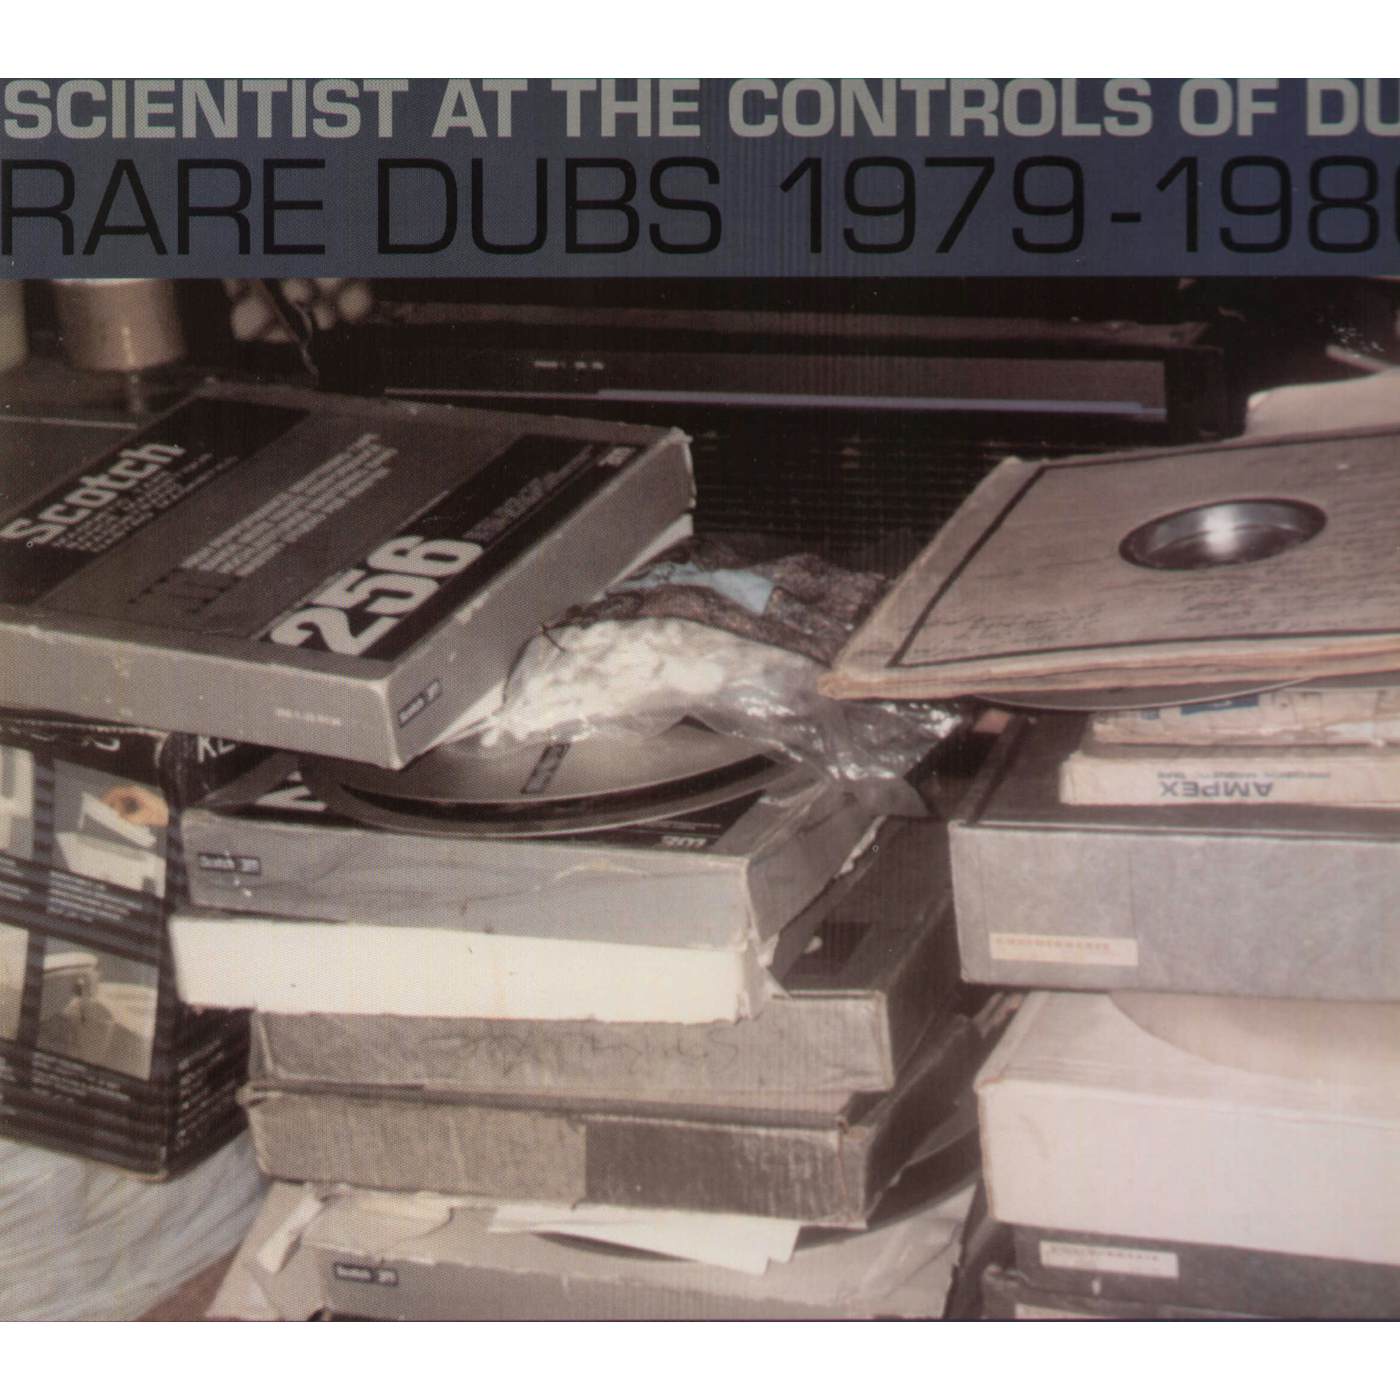 Scientist AT THE CONTROLS OF DUB: RARE DUBS 1979-1980 Vinyl Record